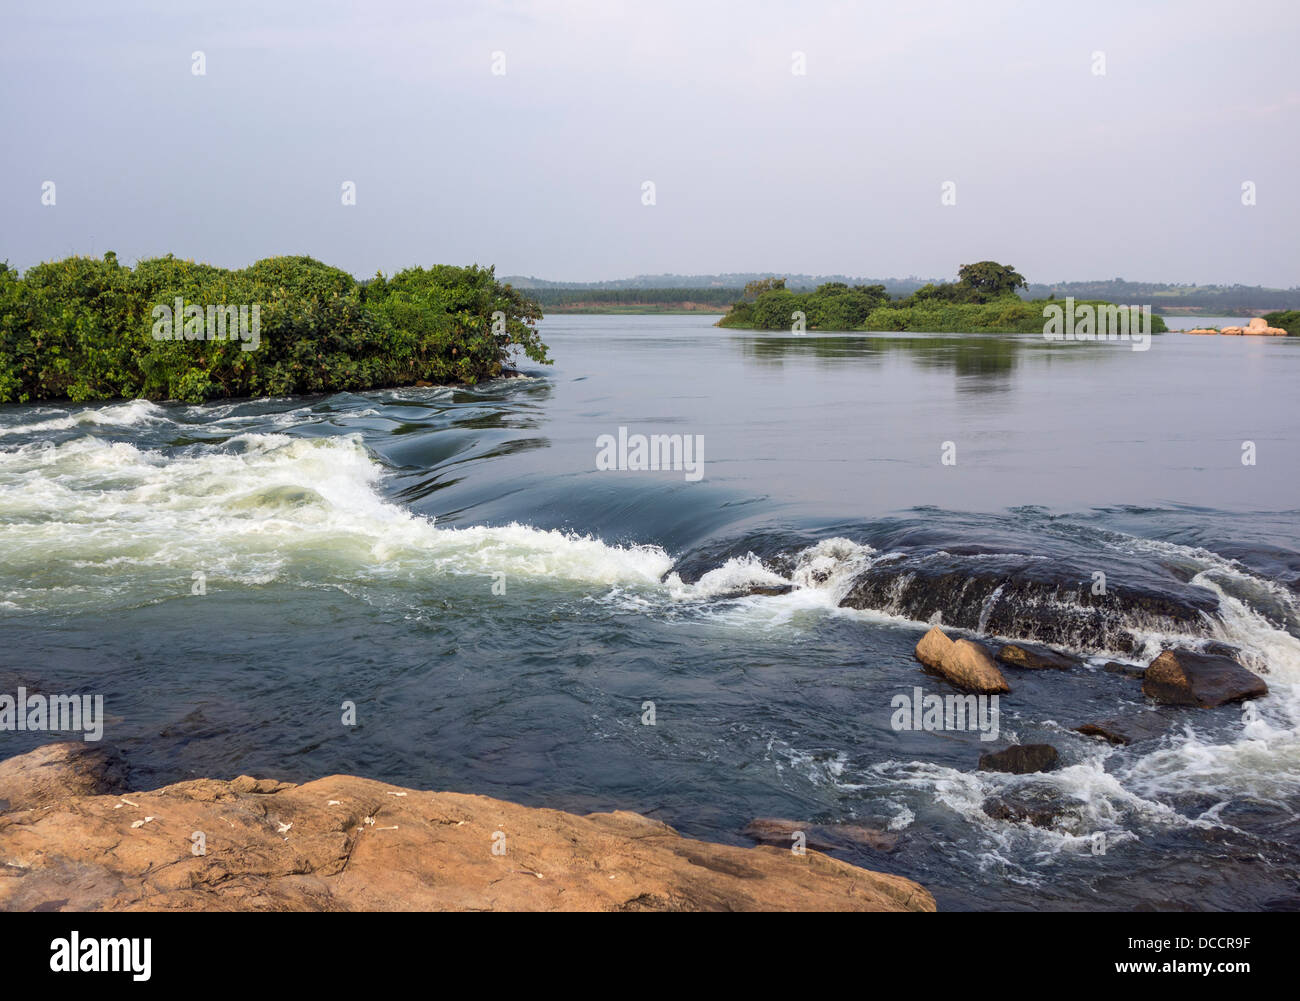 Rapids on the River Nile - Uganda Stock Photo